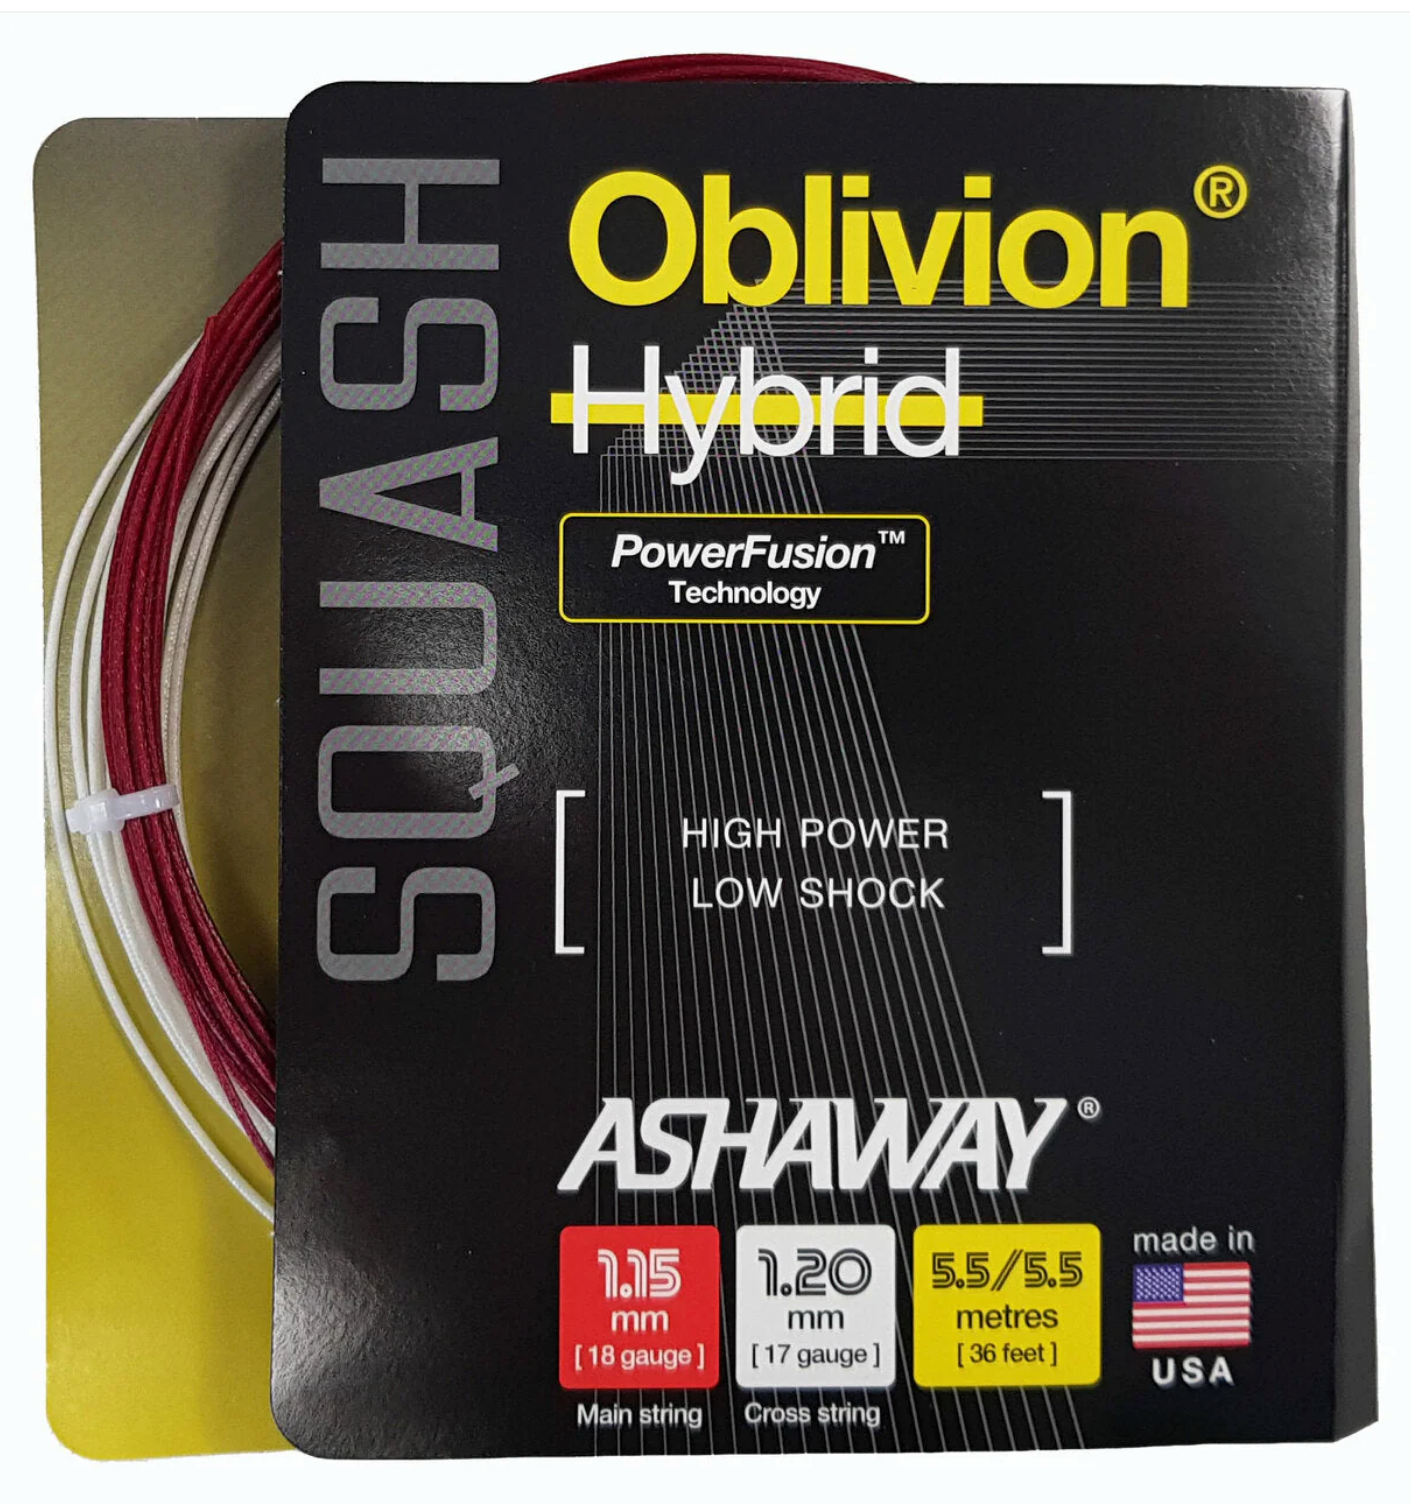 Oblivion Hybrid 9m Coil